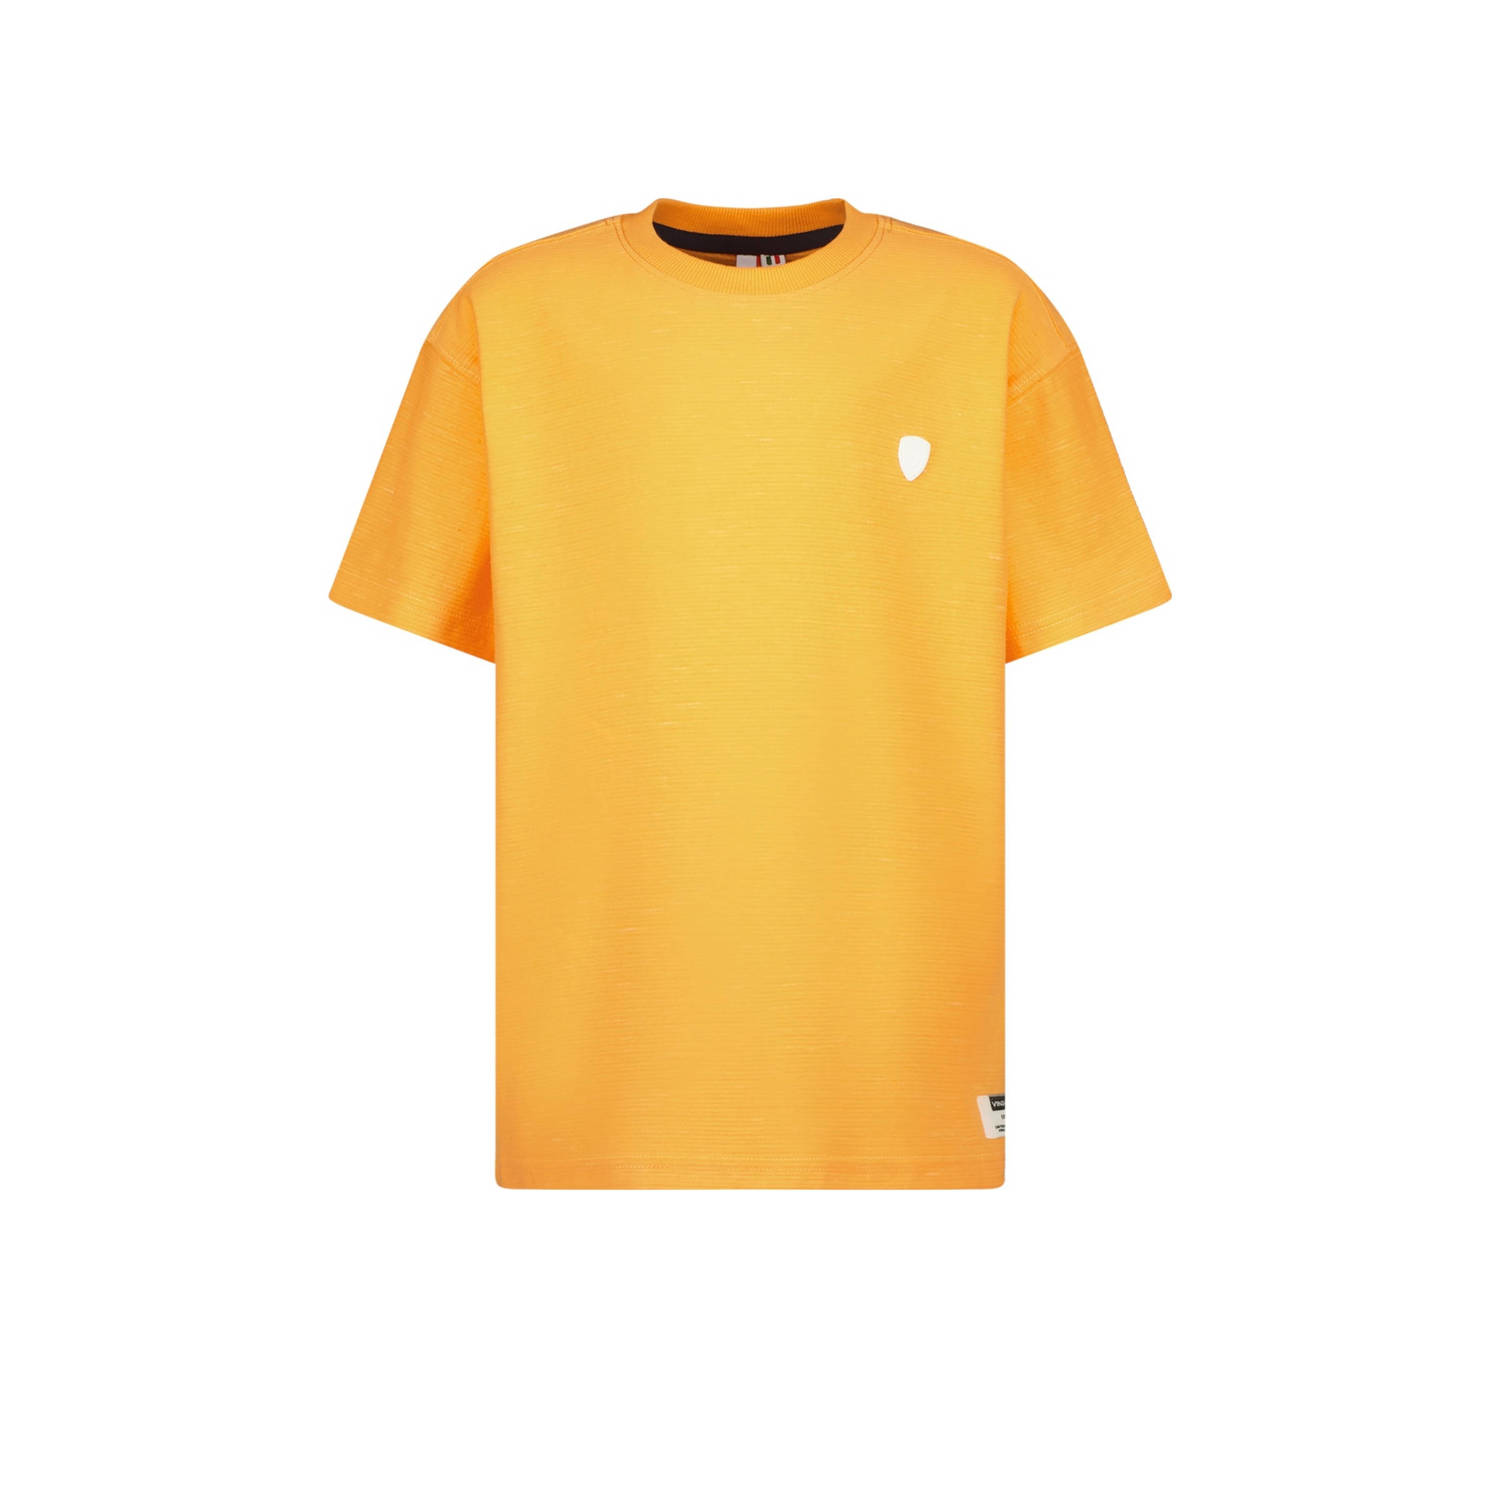 Vingino T-shirt oranje